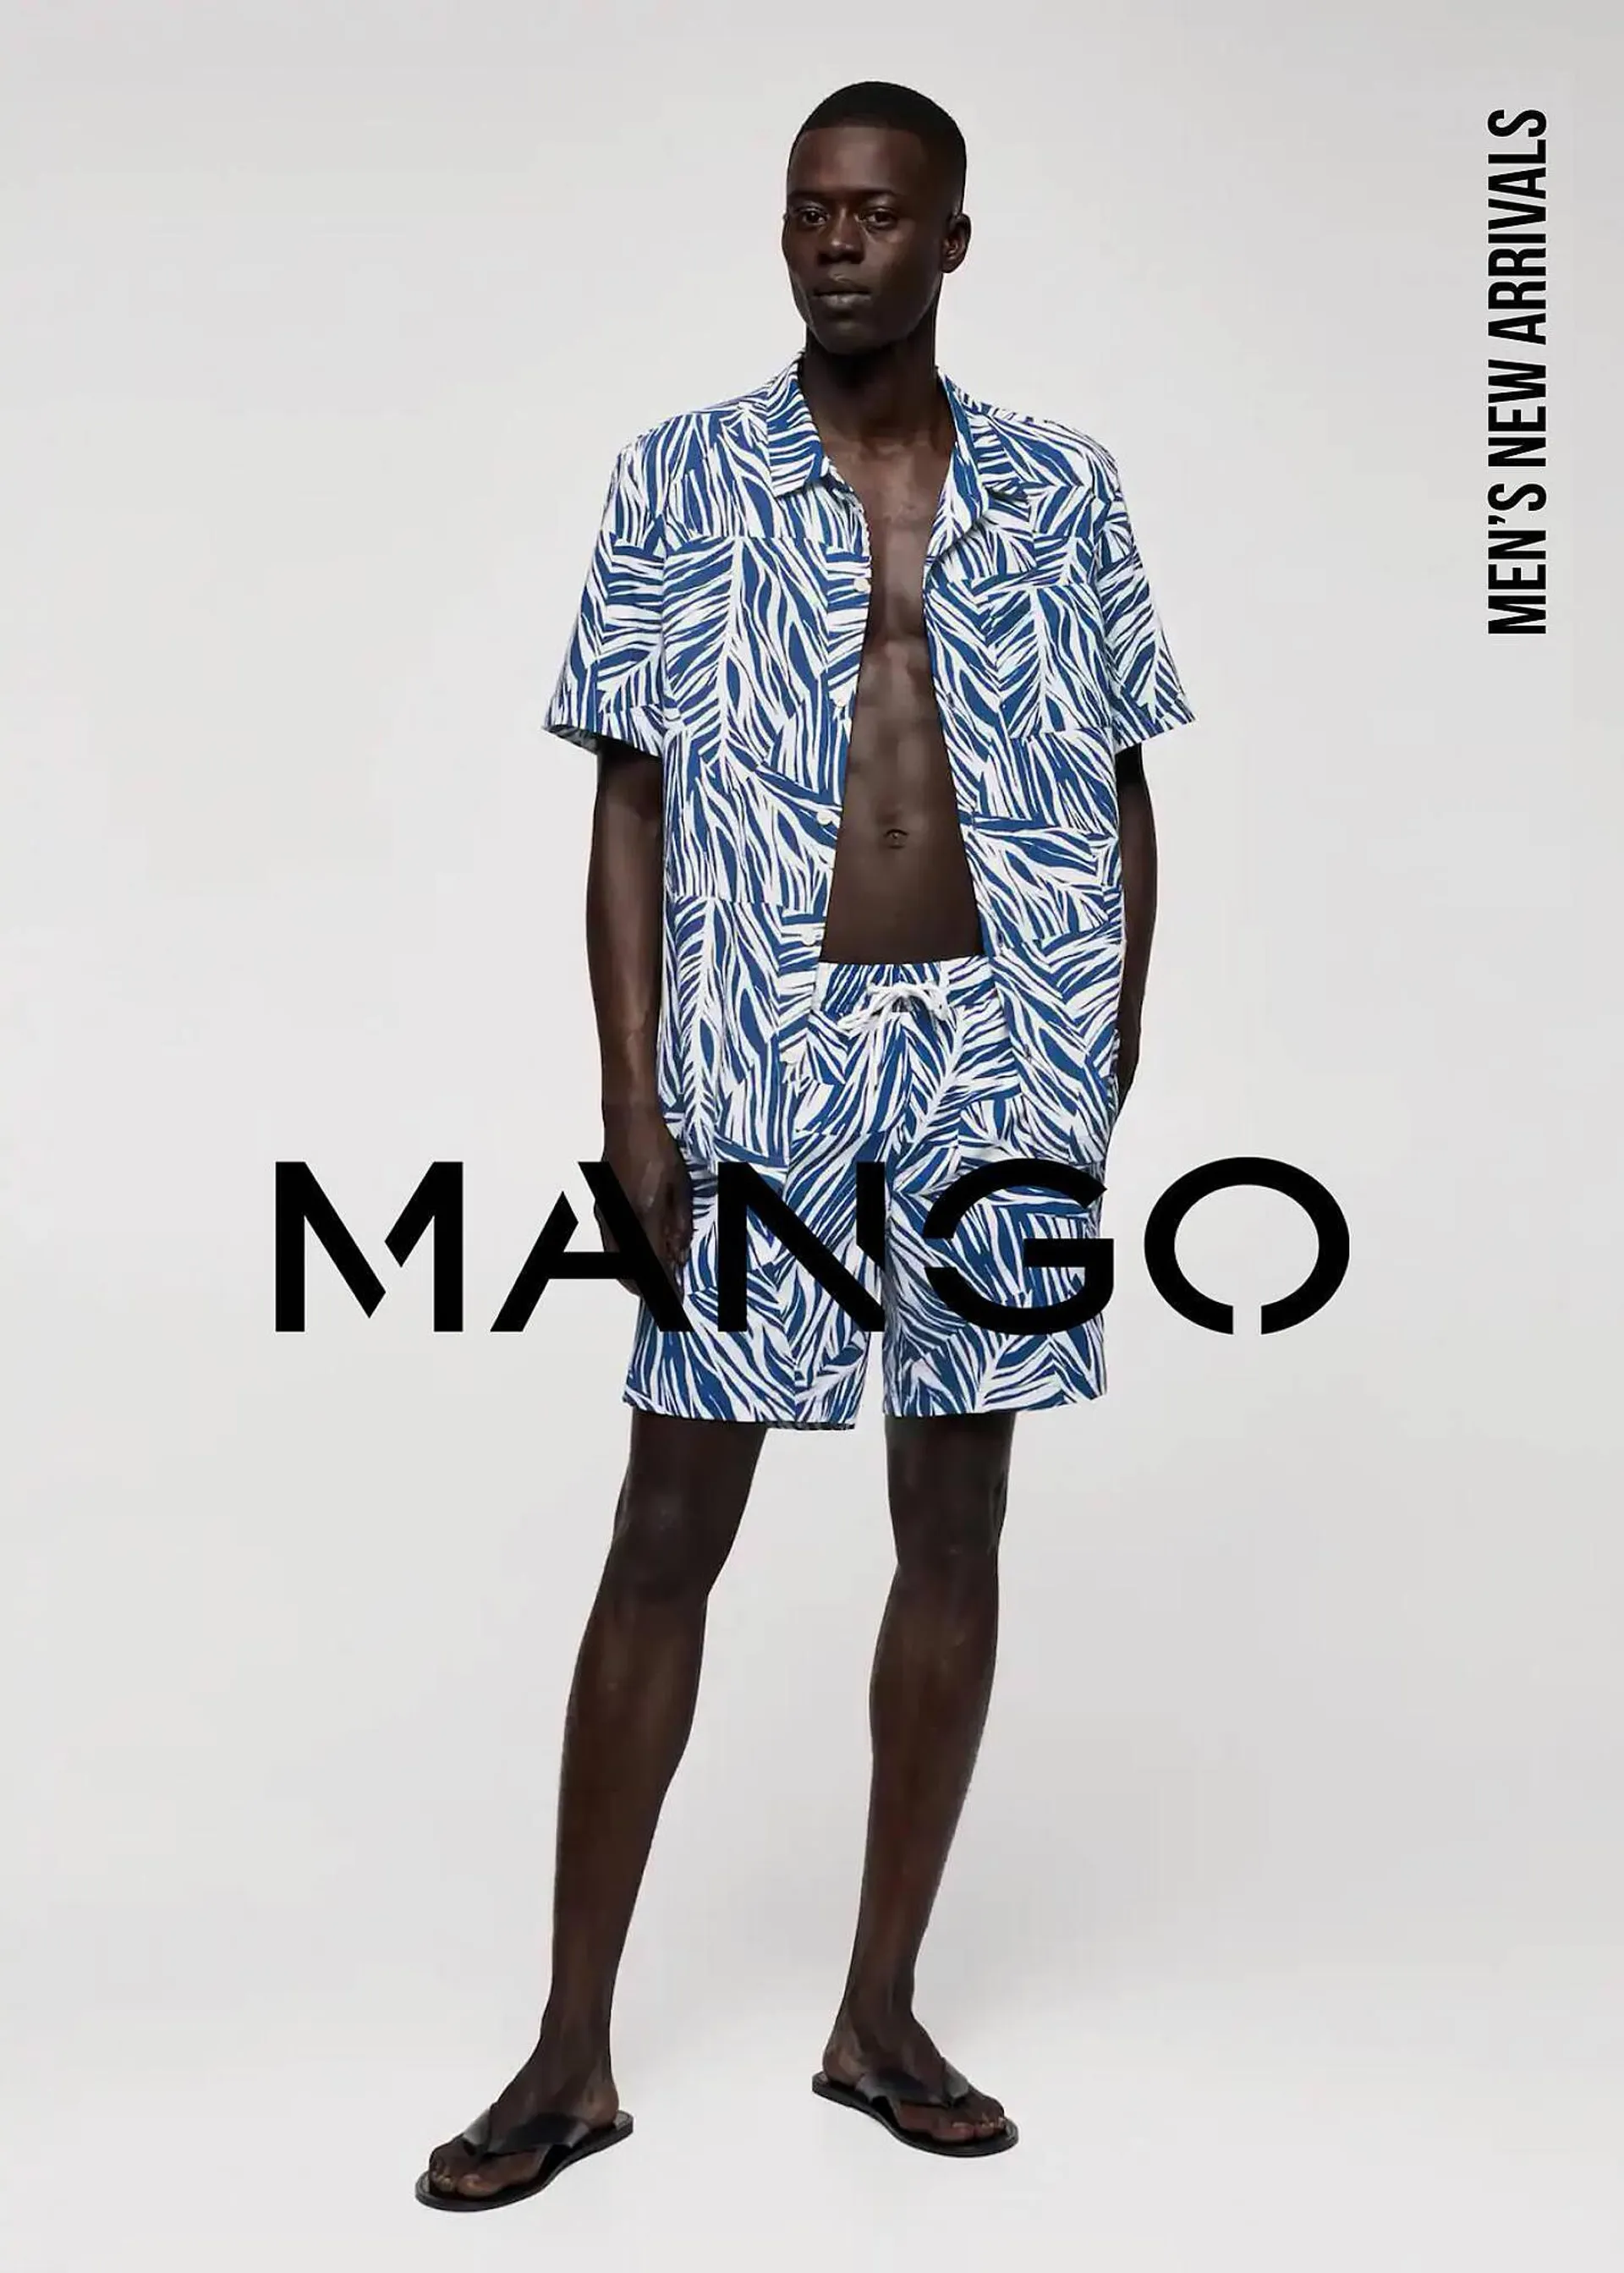 Mango catalogue - 1